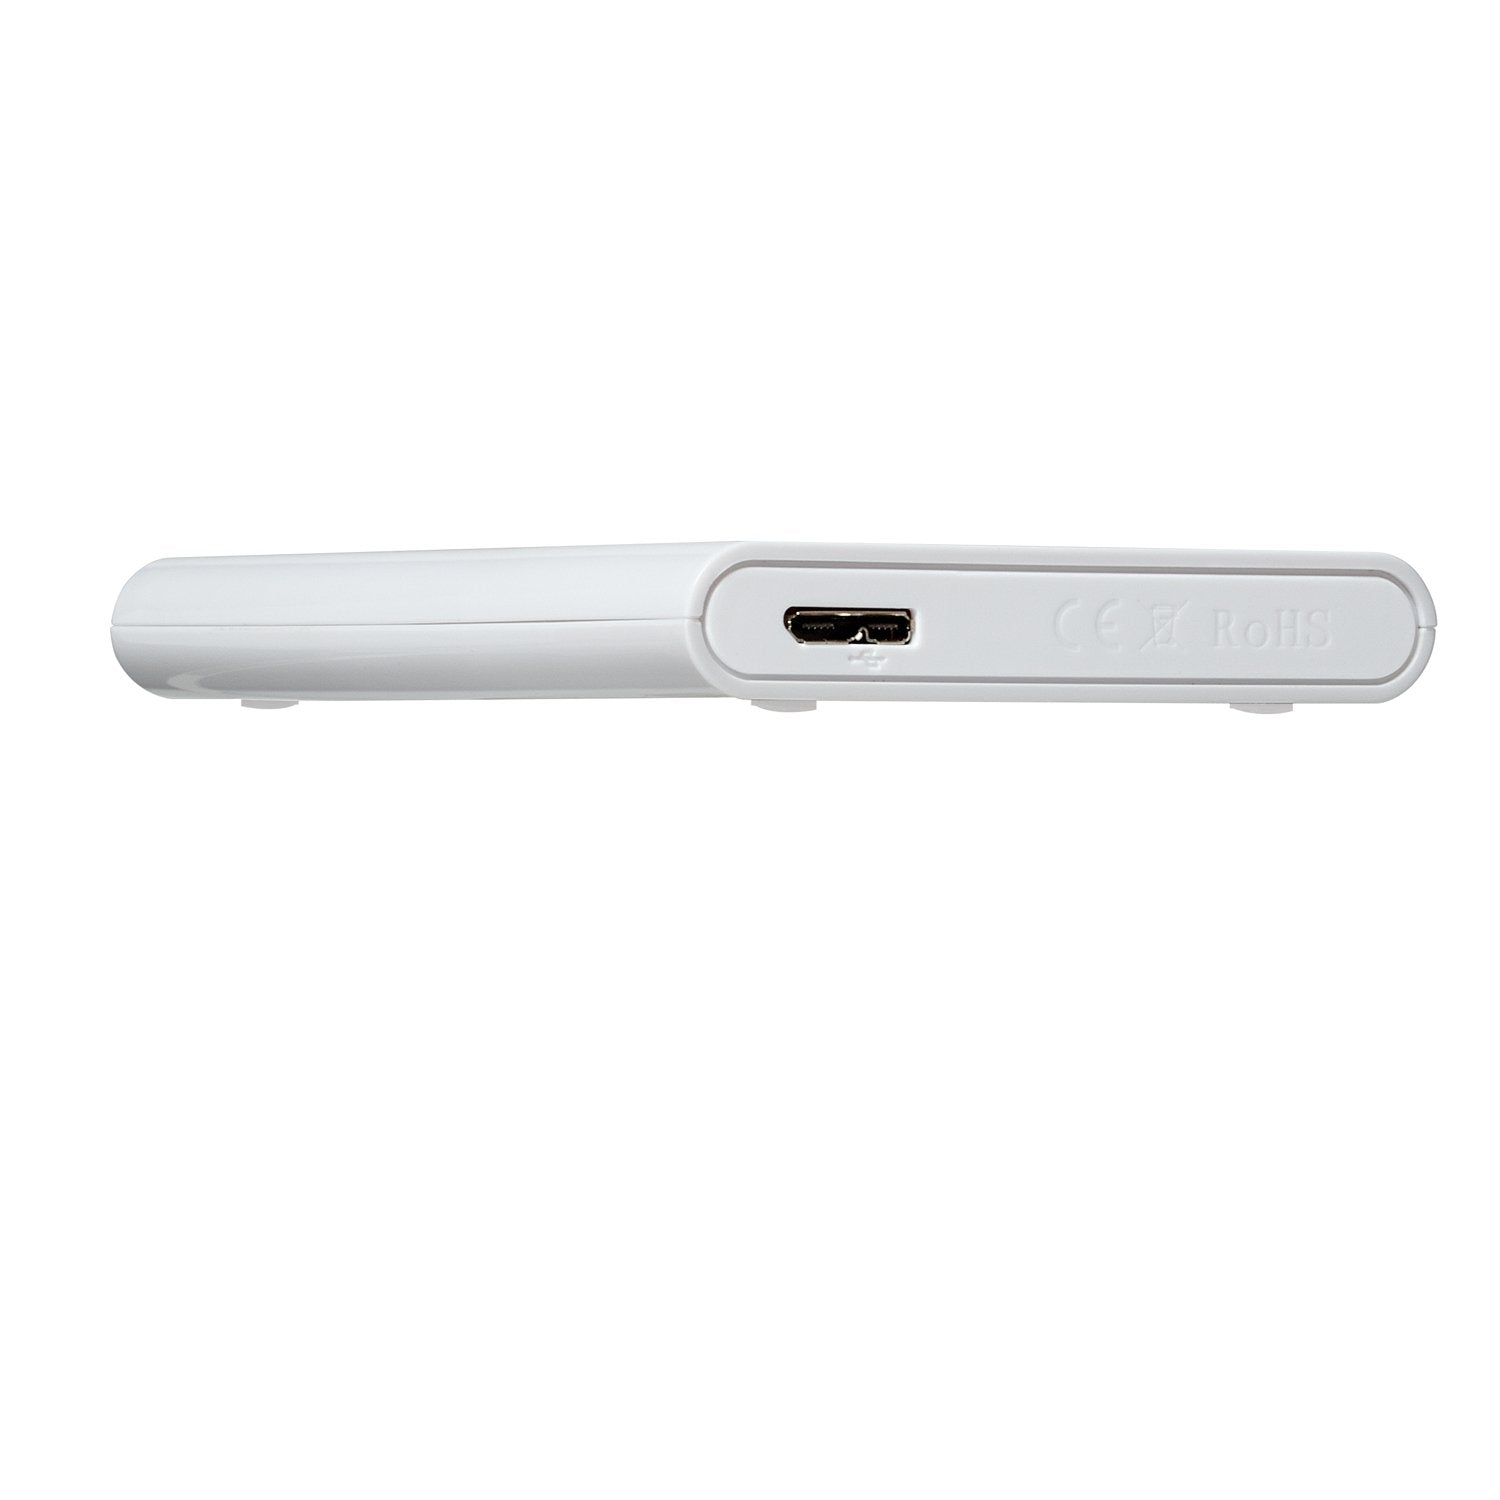 Bipra S3 2.5 inch USB 3.0 FAT32 Portable External Hard Drive - White (1 TB)